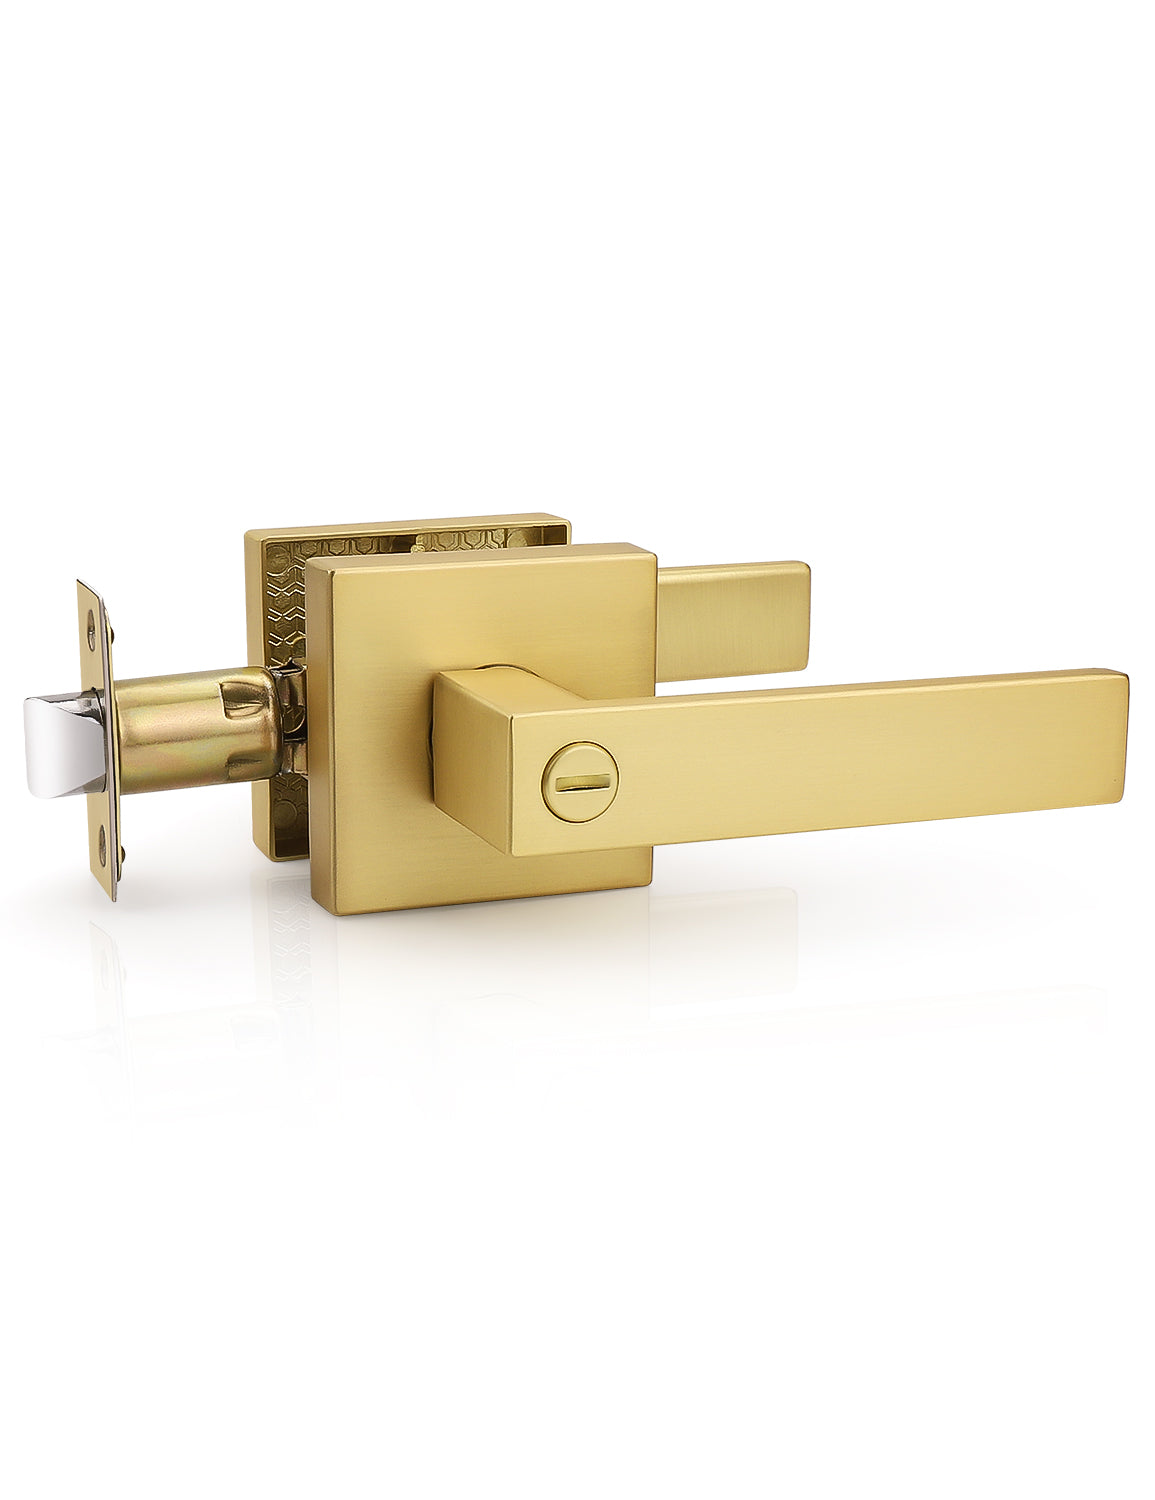 Tinewa 1 Pack Heavy Duty Gold Square Privacy Interior Door Levers Bedroom and Bathroom Door Handles Keyless Bed/Bath Lockset